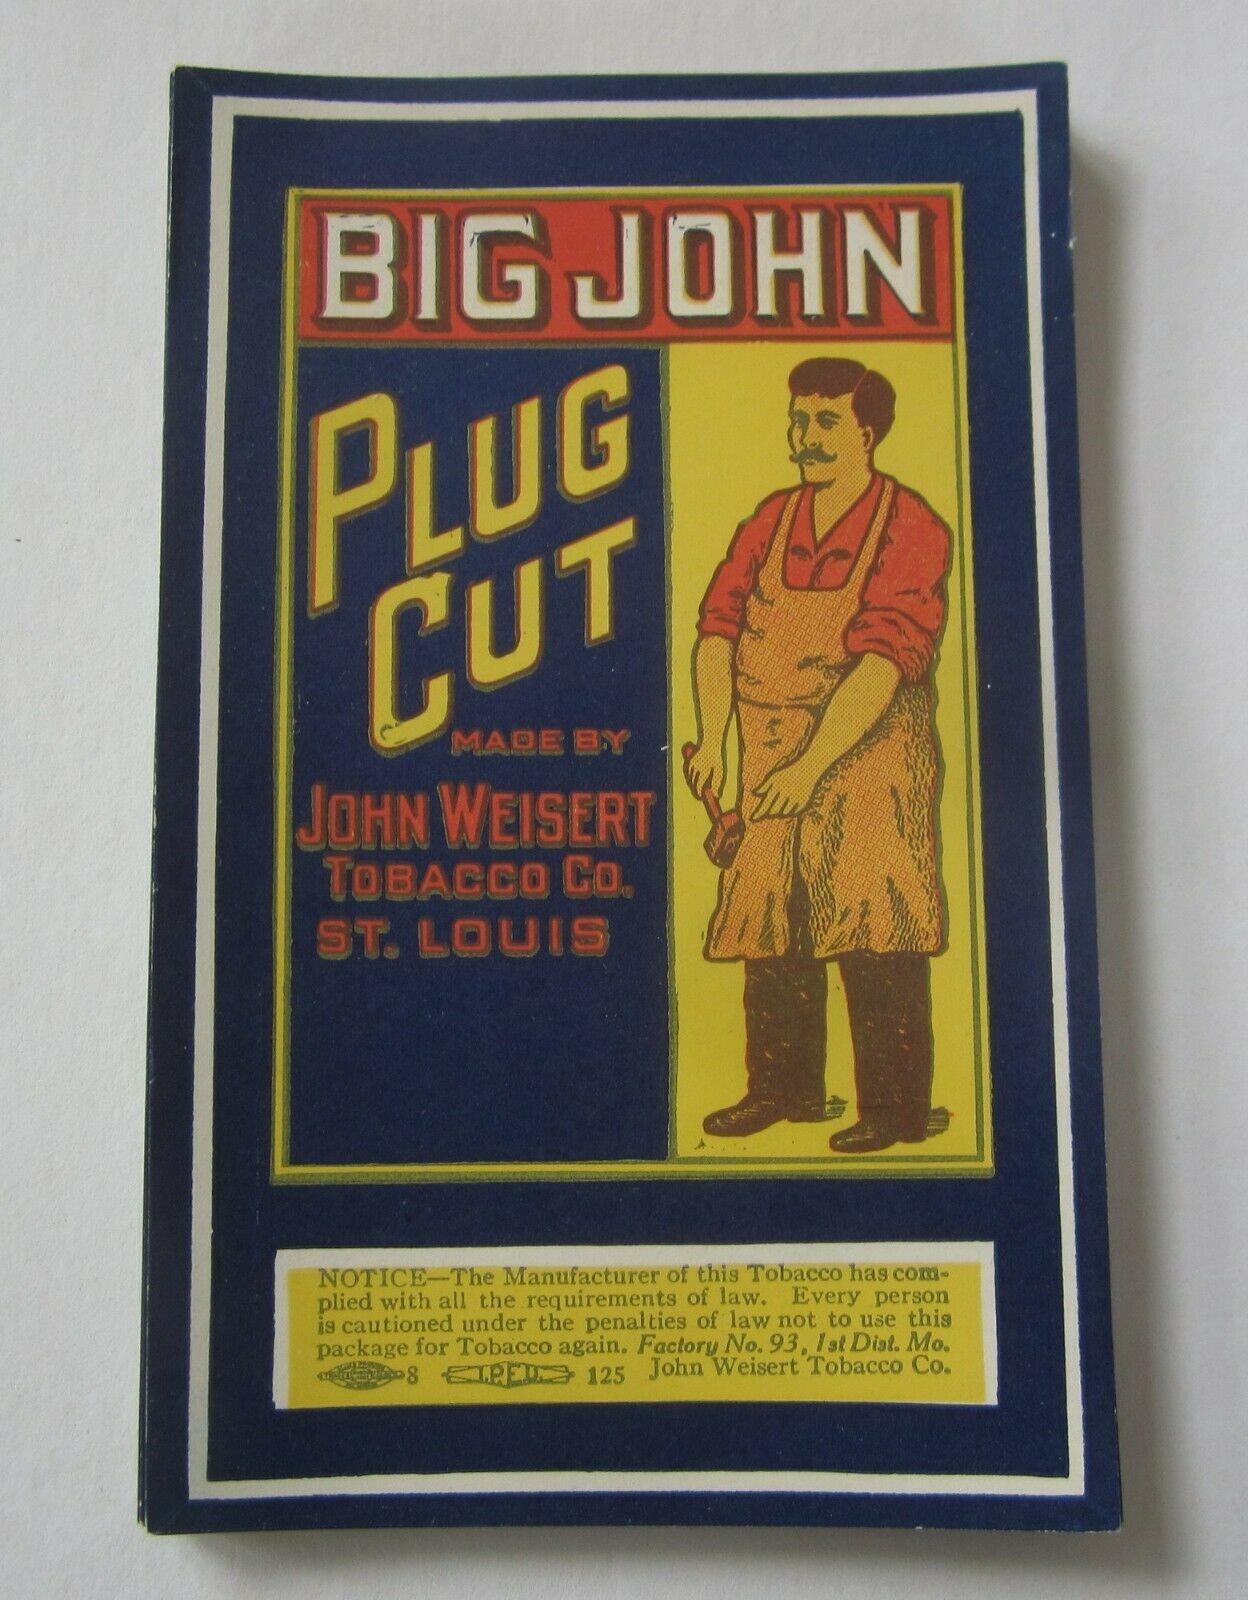  Lot of 50 Old Vintage BIG JOHN - Plug Cut TOBA...